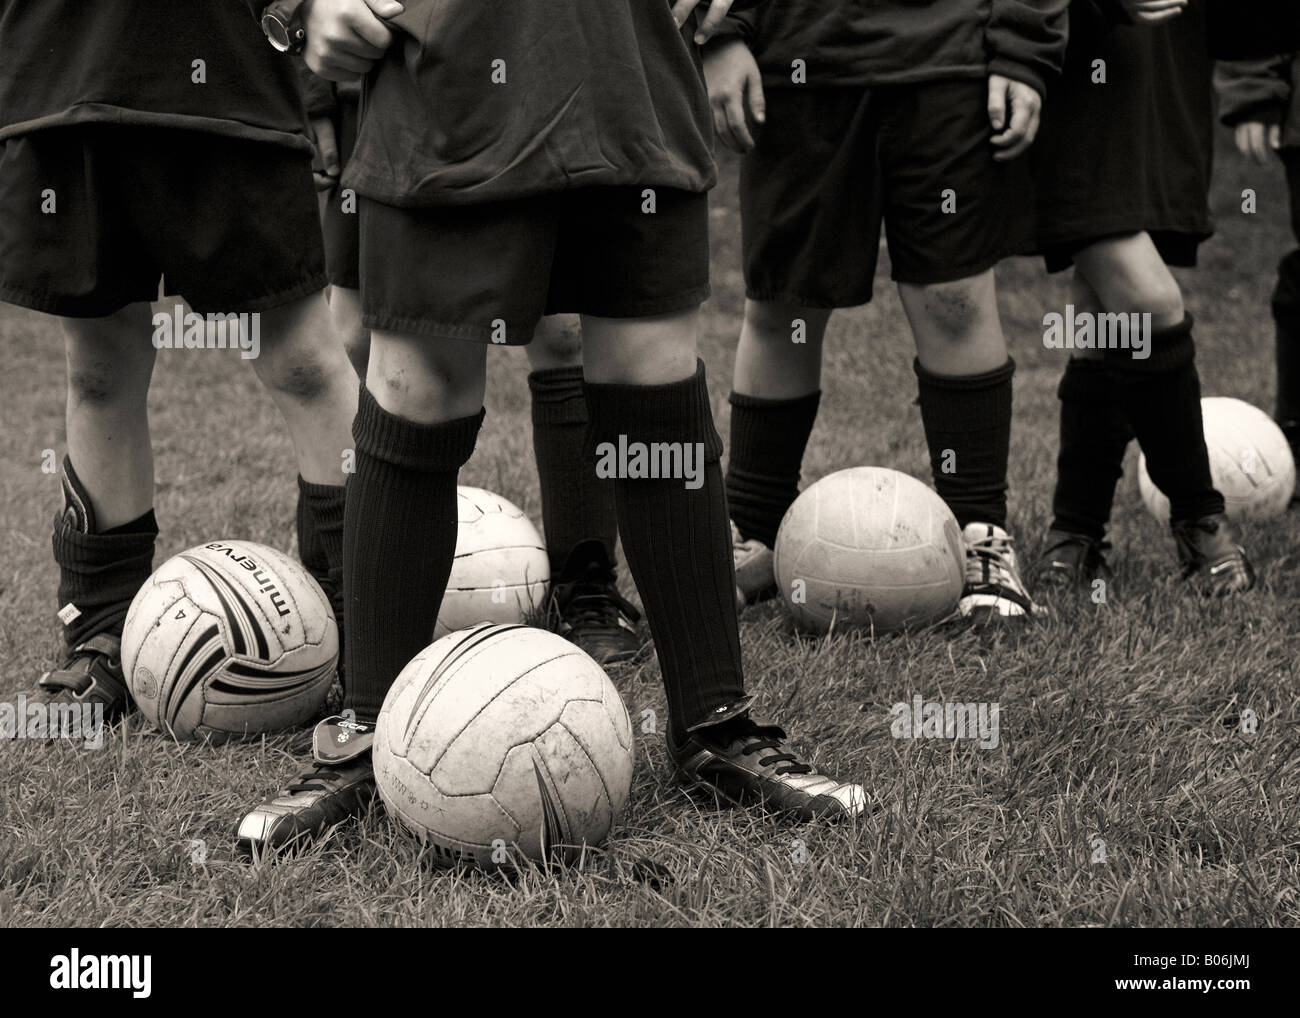 Boys legs with footballs Stock Photo